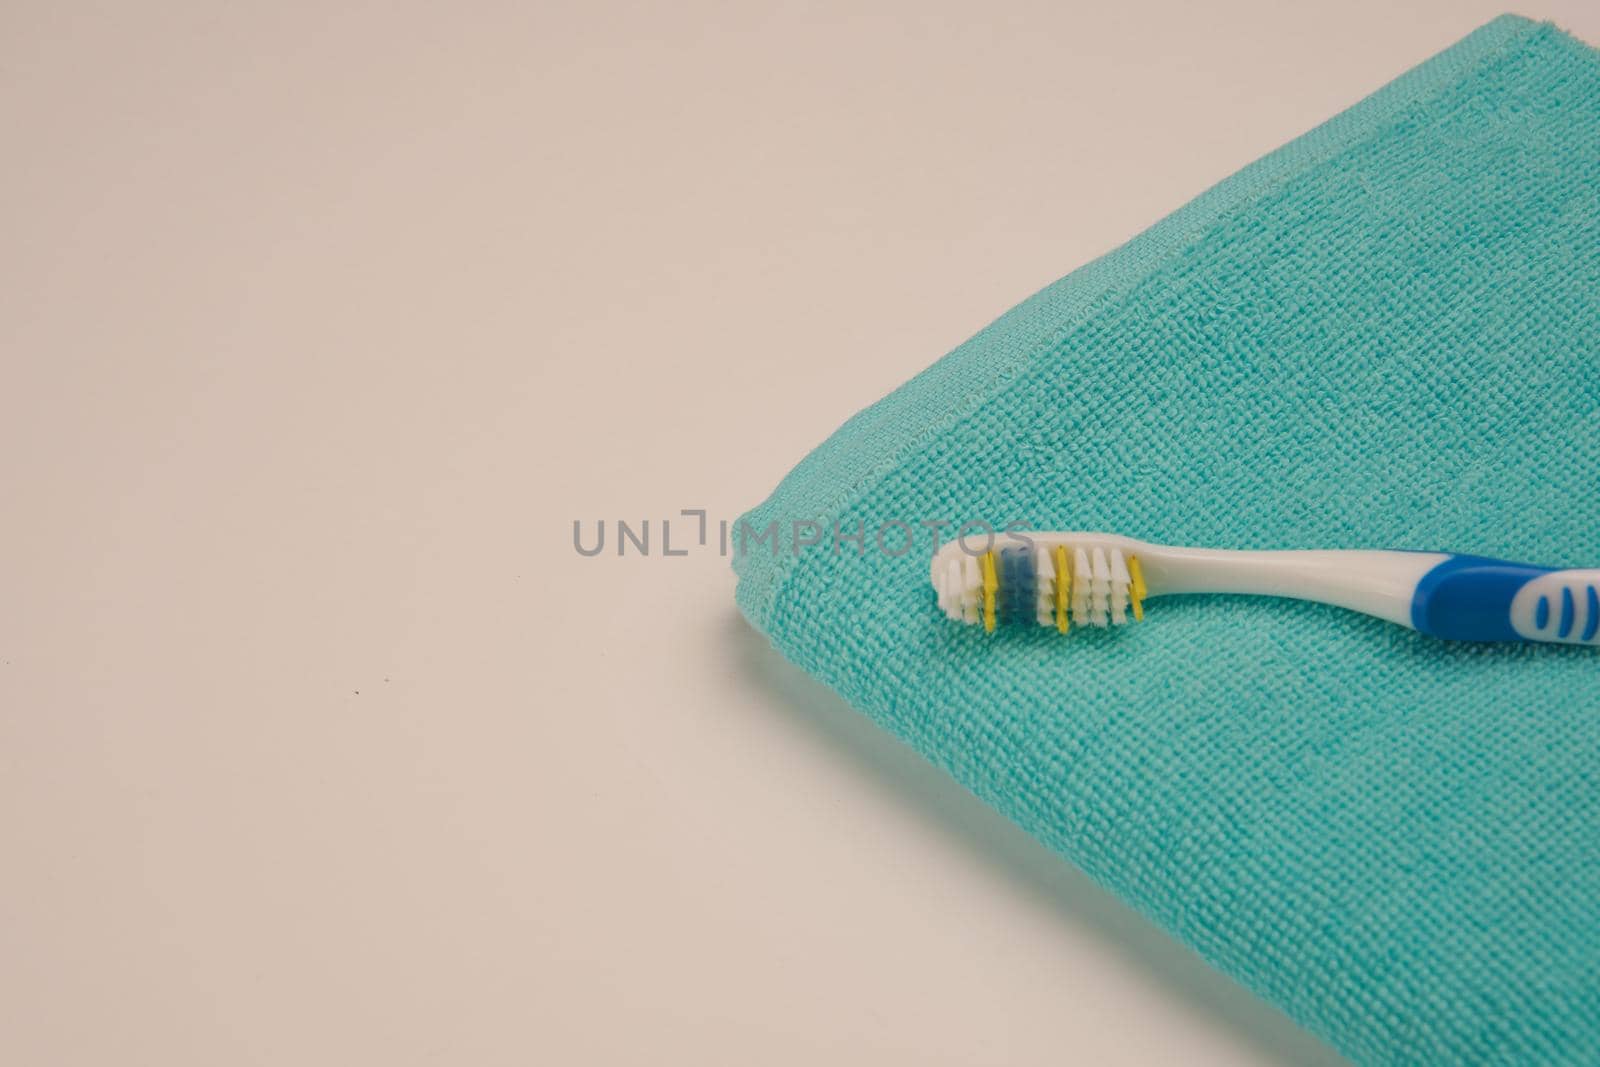 toothbrush towels hygiene care bath supplies sanitation. High quality photo